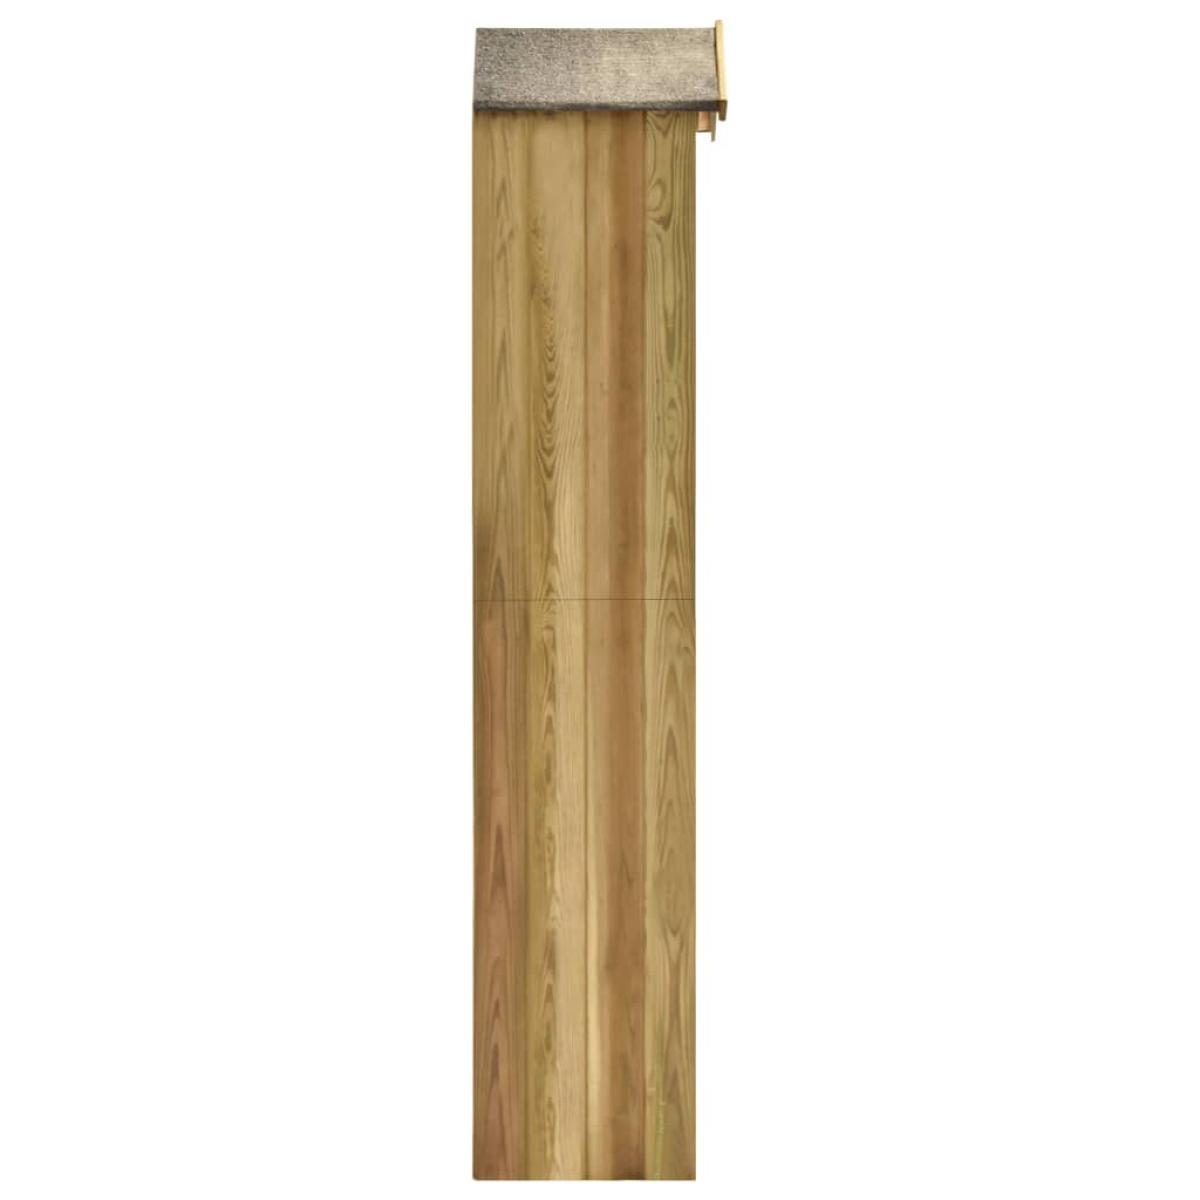 Caseta herramientas jardín madera pino impregnada 36x36x163 cm